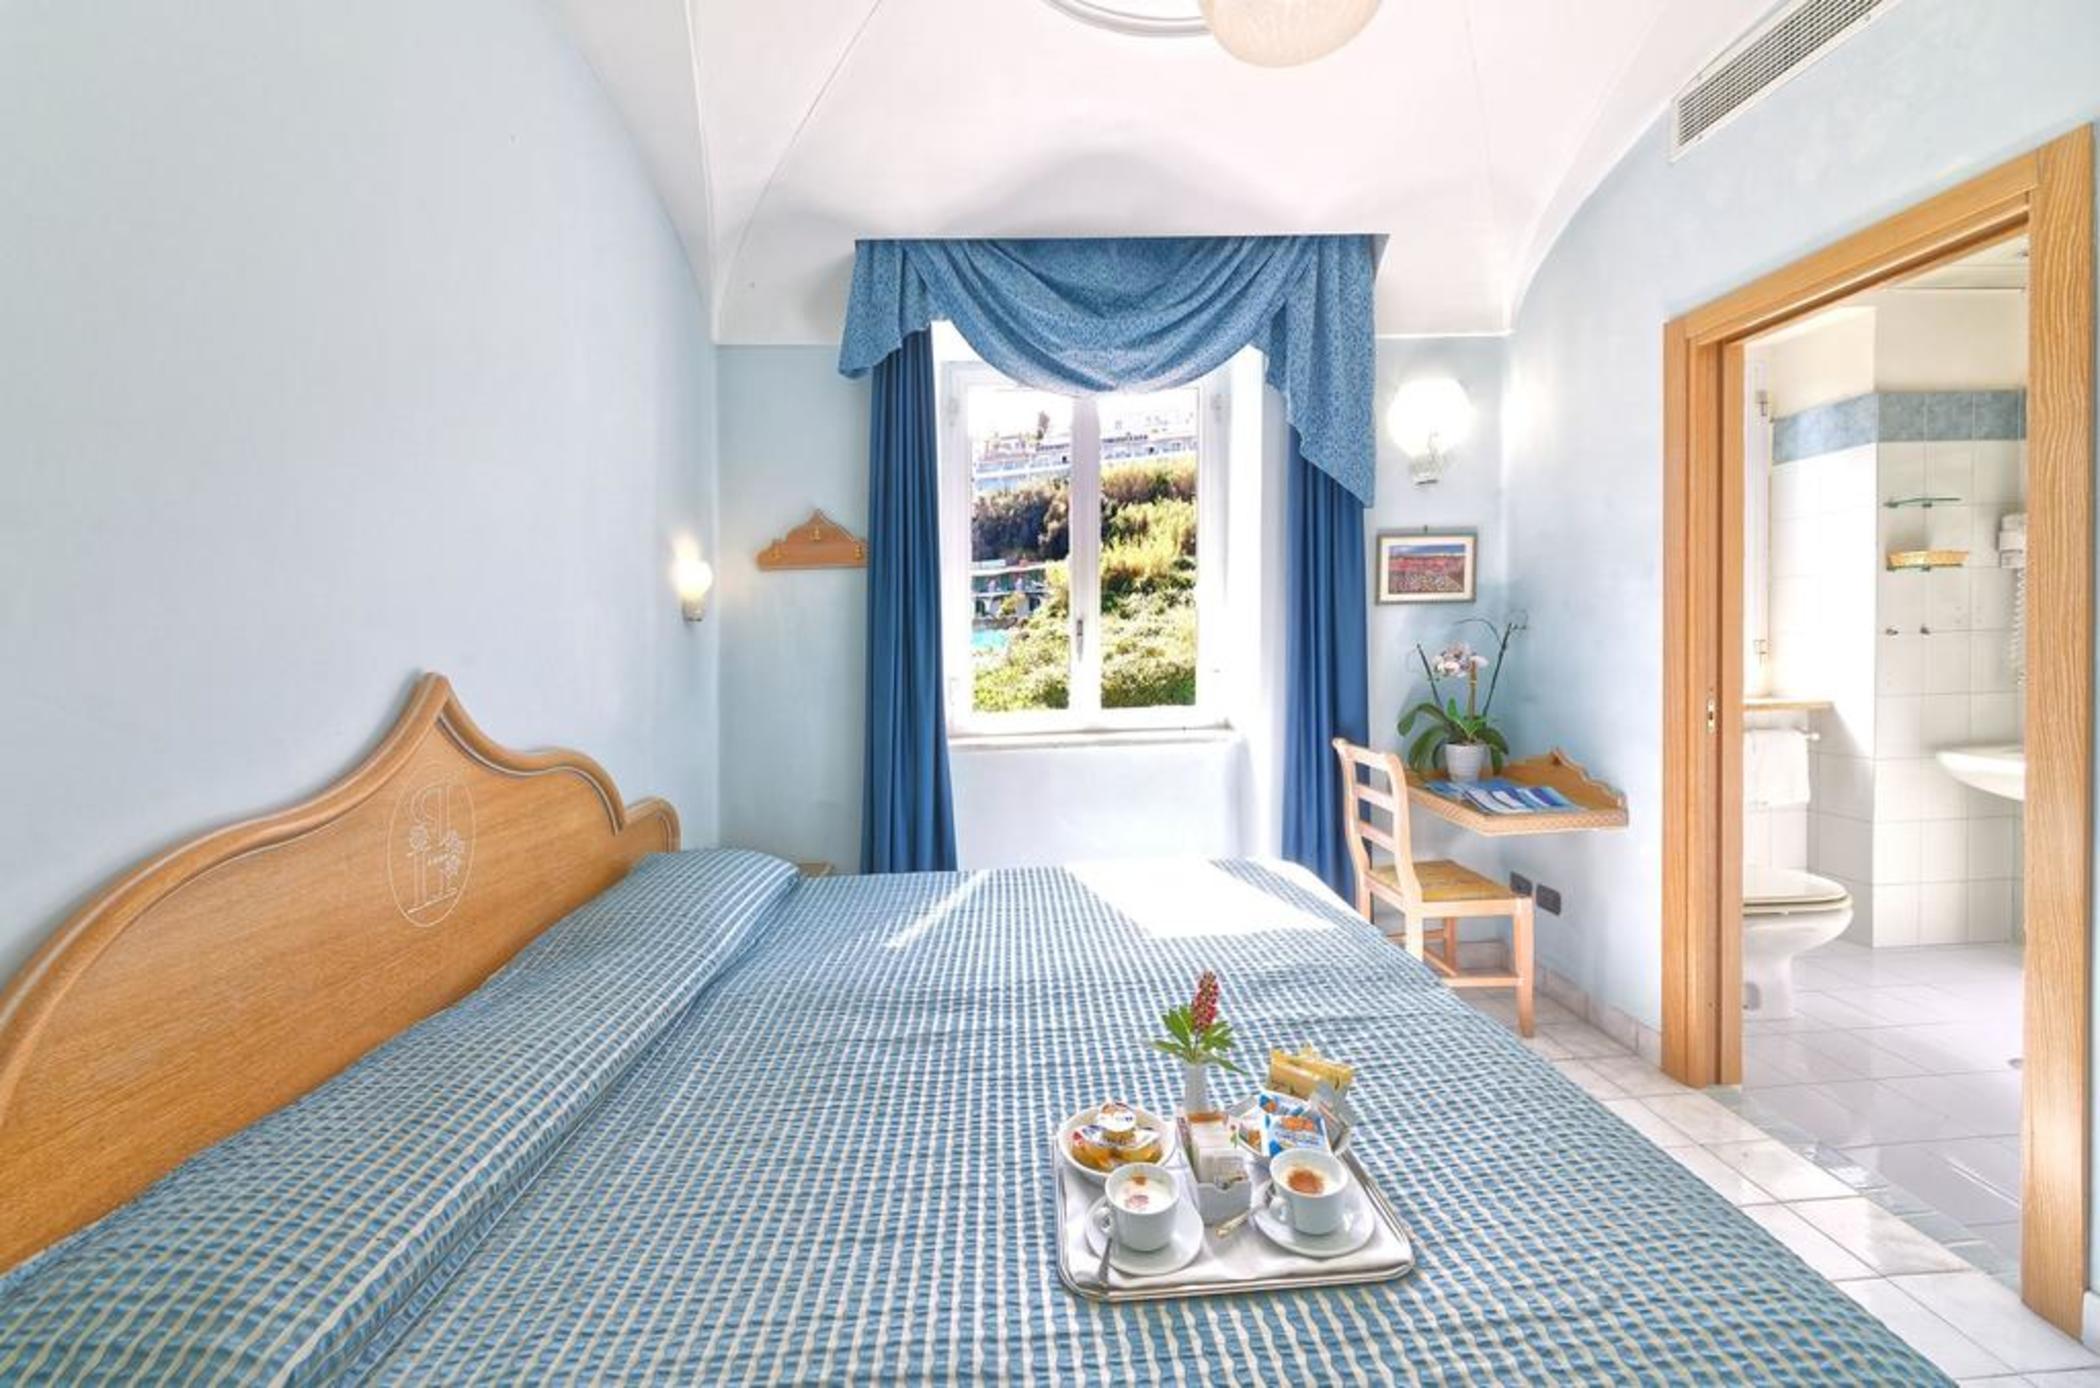 Hotel Punta Imperatore Forio di Ischia 외부 사진